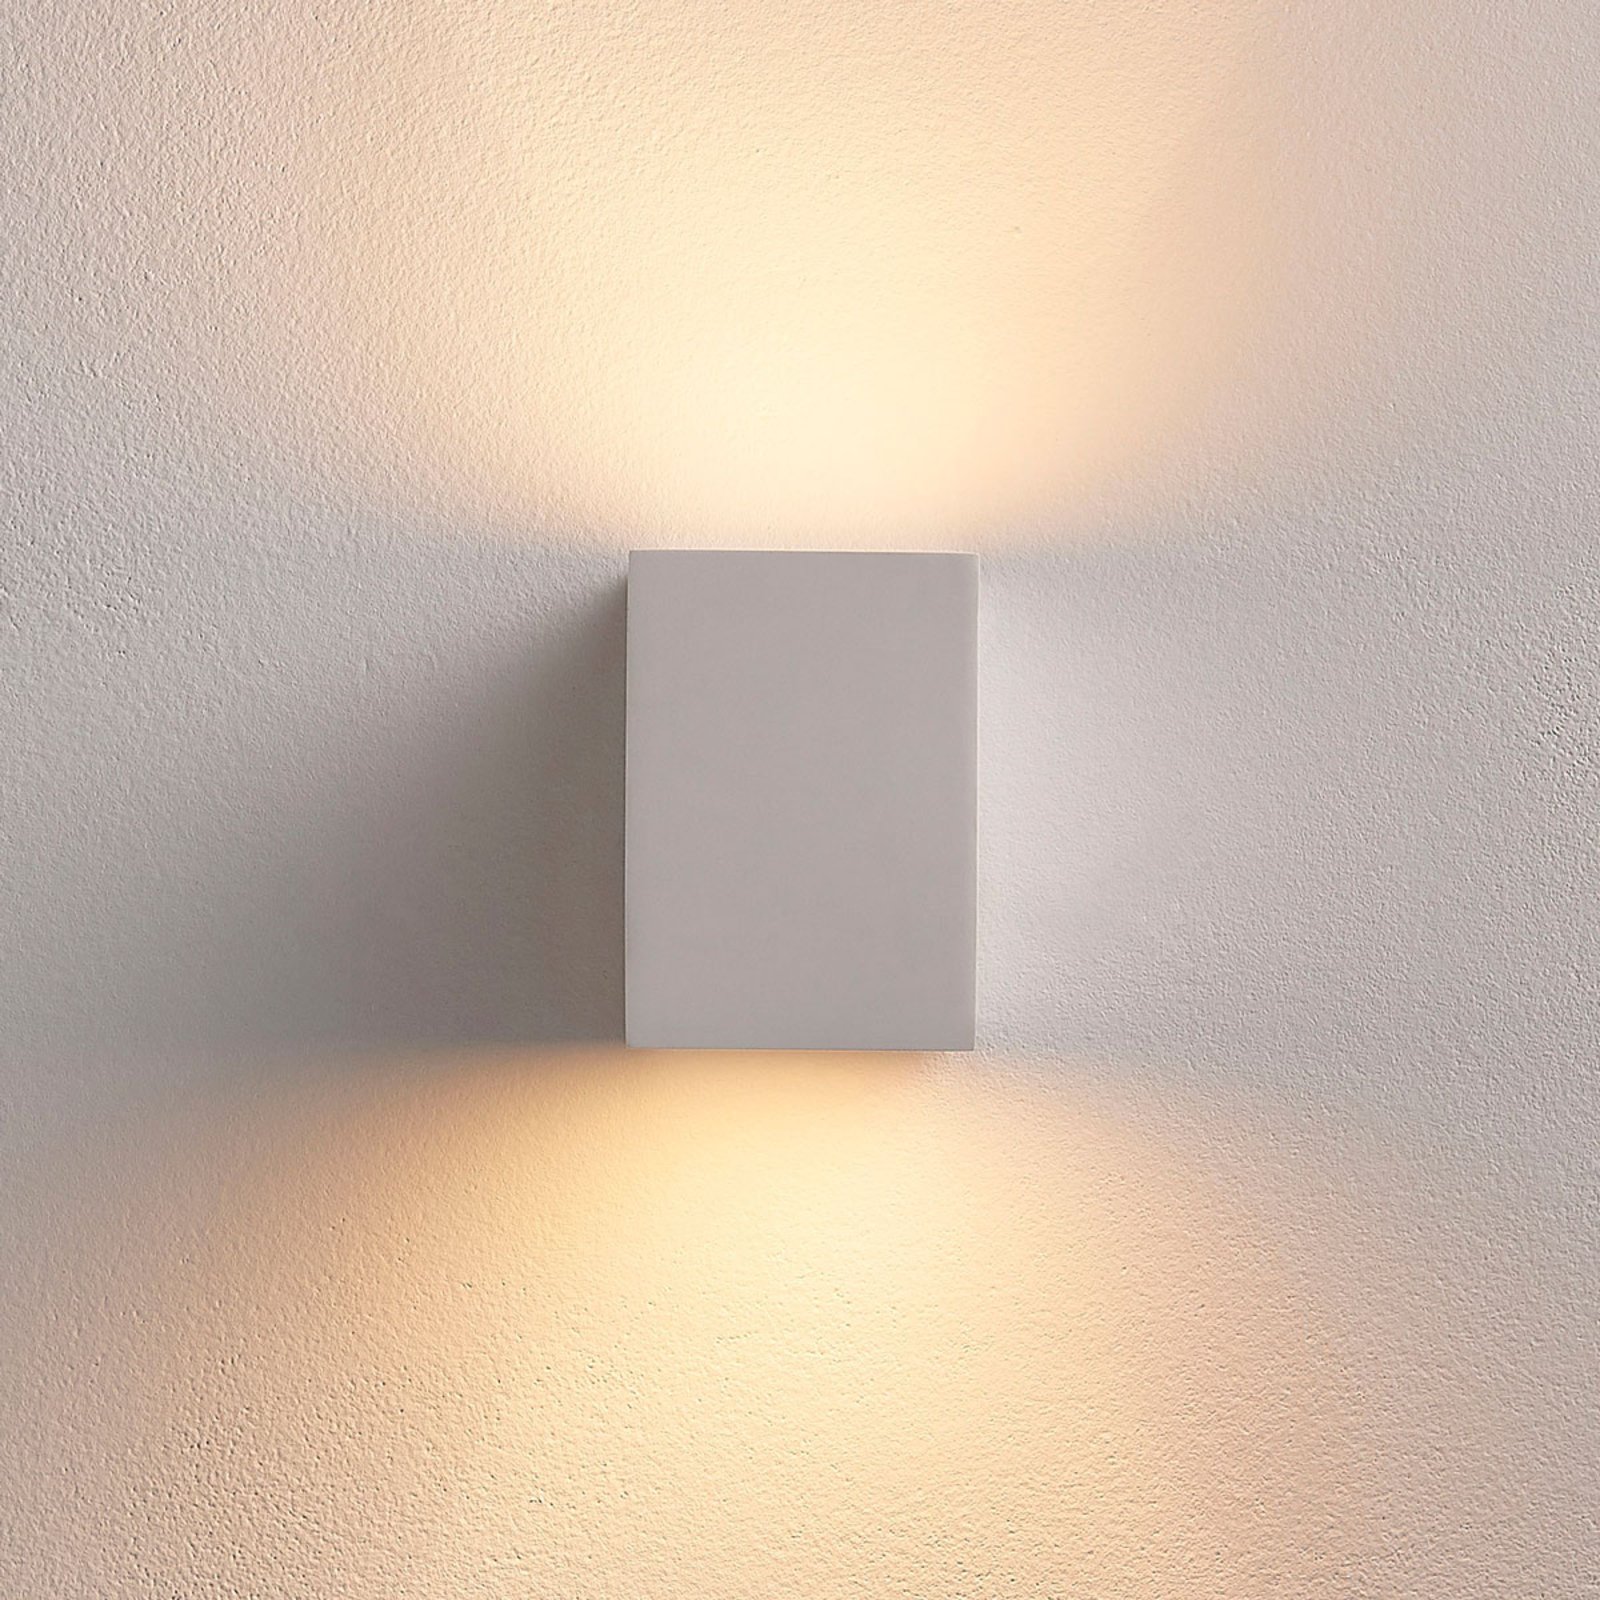 Lindby Jannes wall light, plaster, white, angular